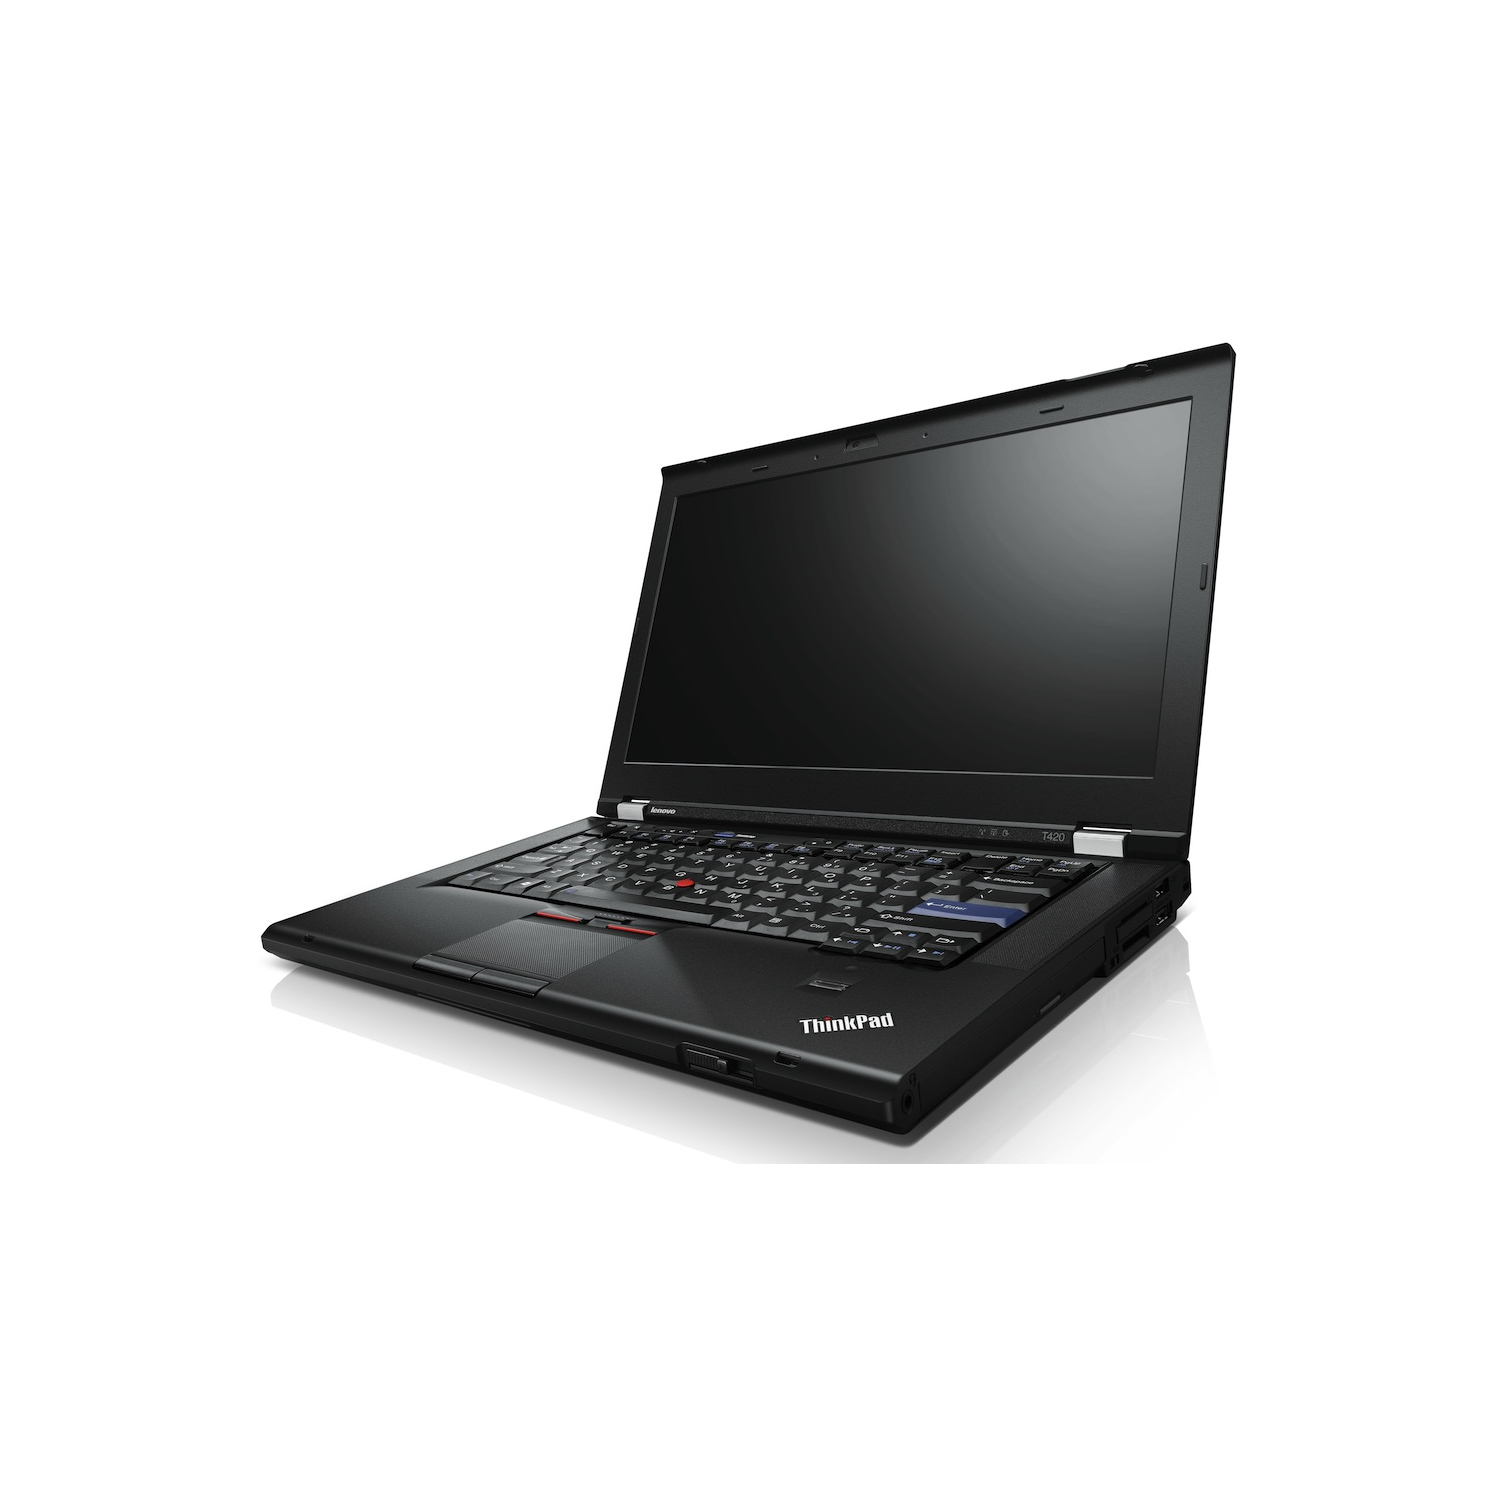 Refurbished (Good) - Lenovo Thinkpad T420 Laptop, Intel i5 2520M CPU, 8GB RAM, Fast 128GB SSD, Webcam, Windows 10